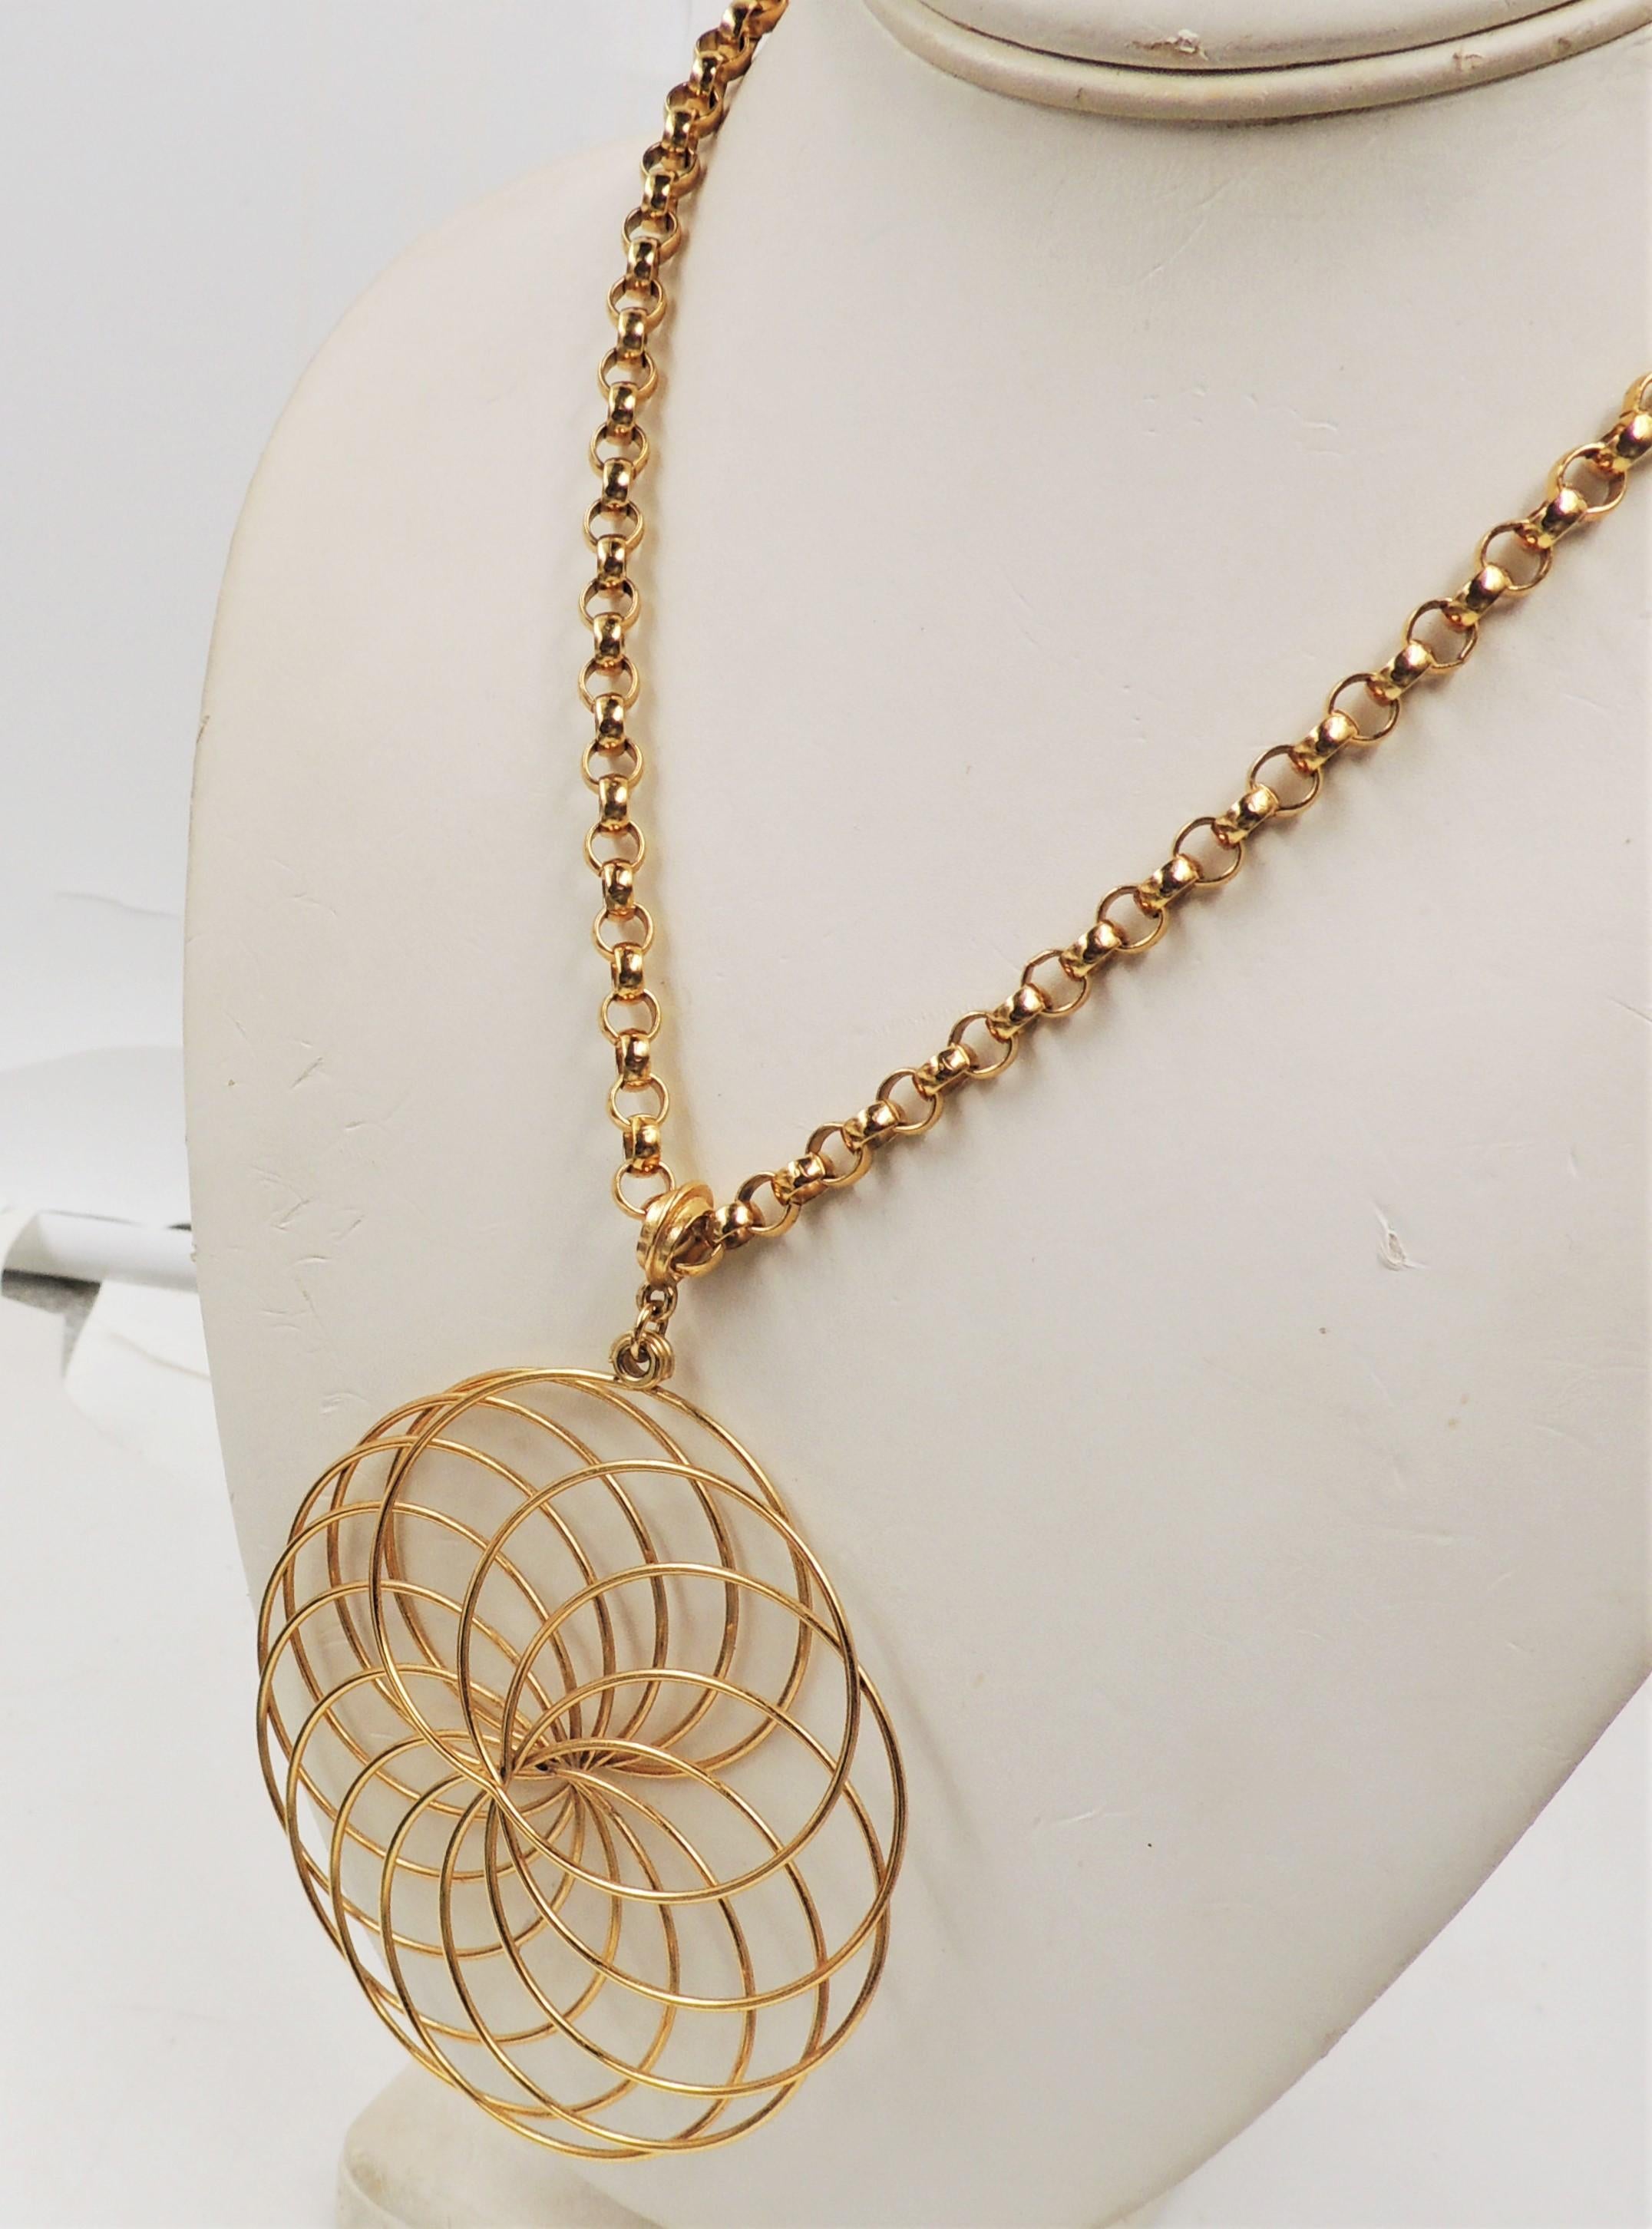 Vintage Signed Crown Trifari Goldtone Spiral Pendant Necklace, 1974 Ad Piece For Sale 1